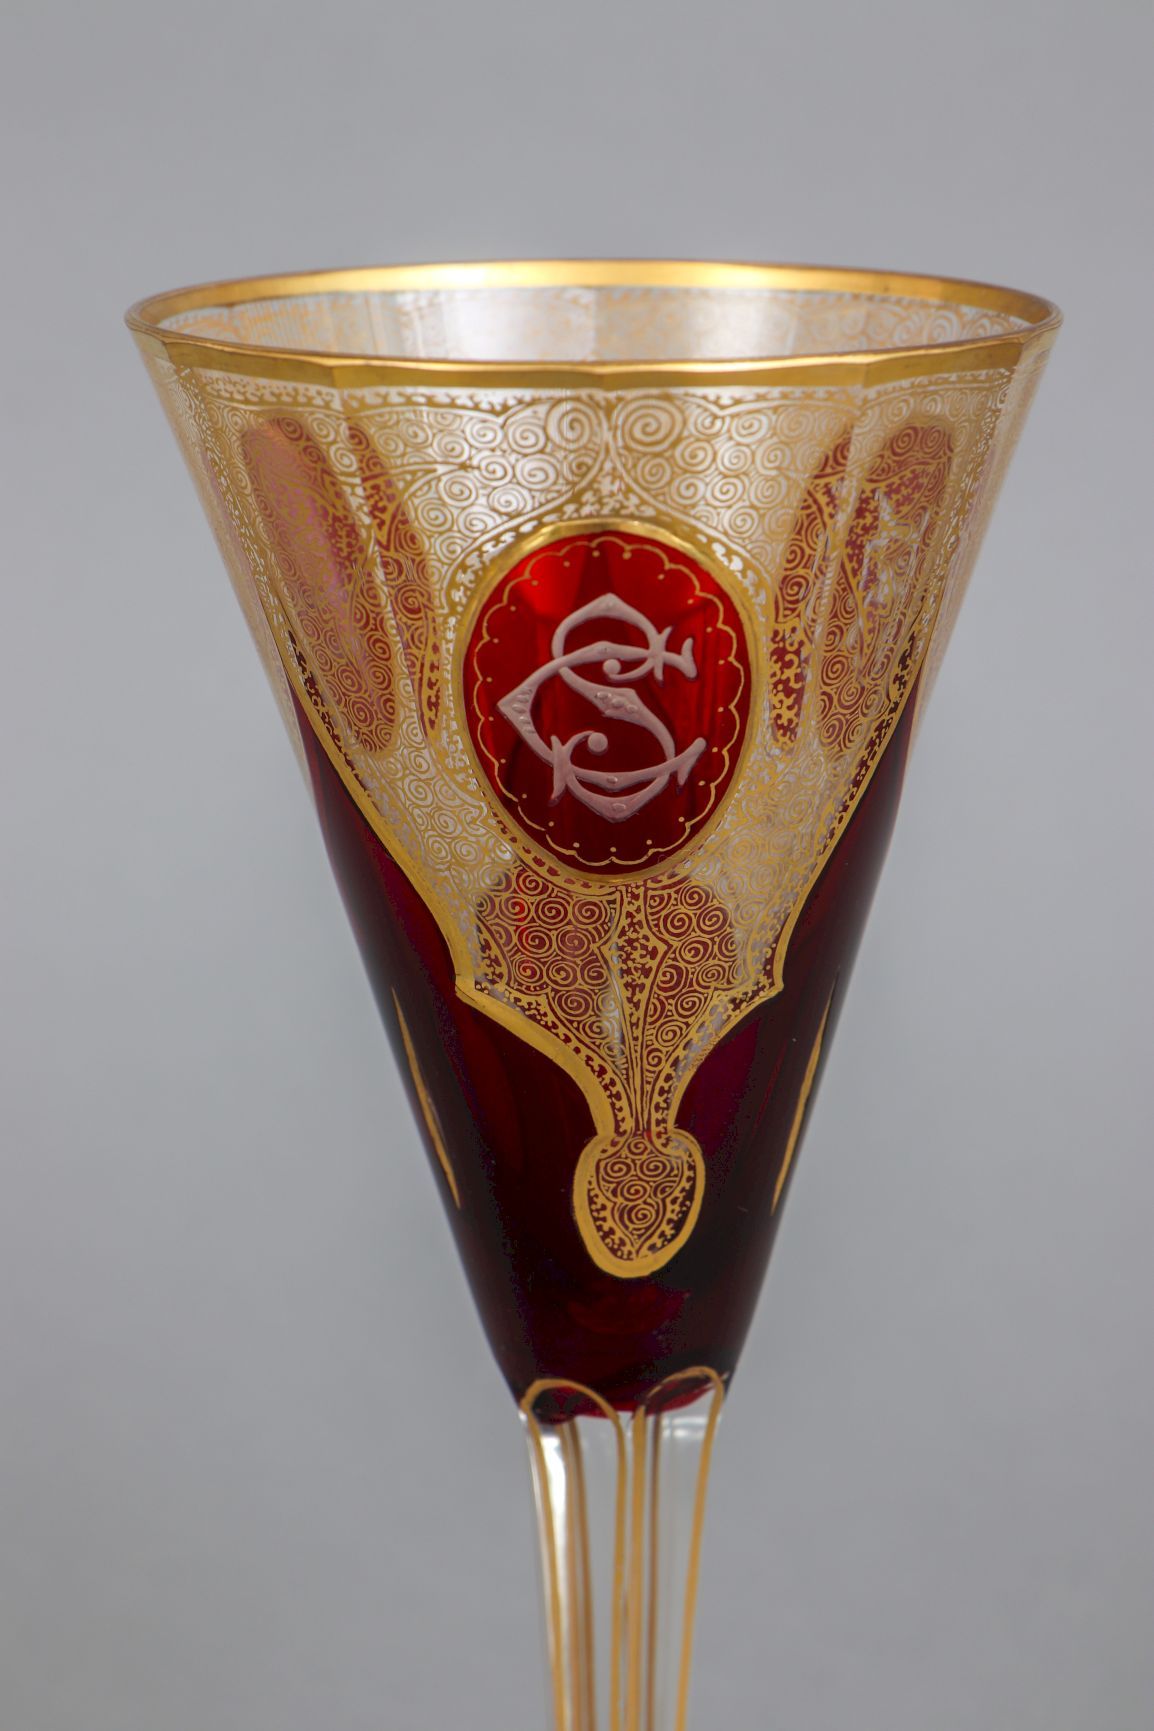 Böhmisches Pokalglas ¨Facon de venise¨ - Image 2 of 3